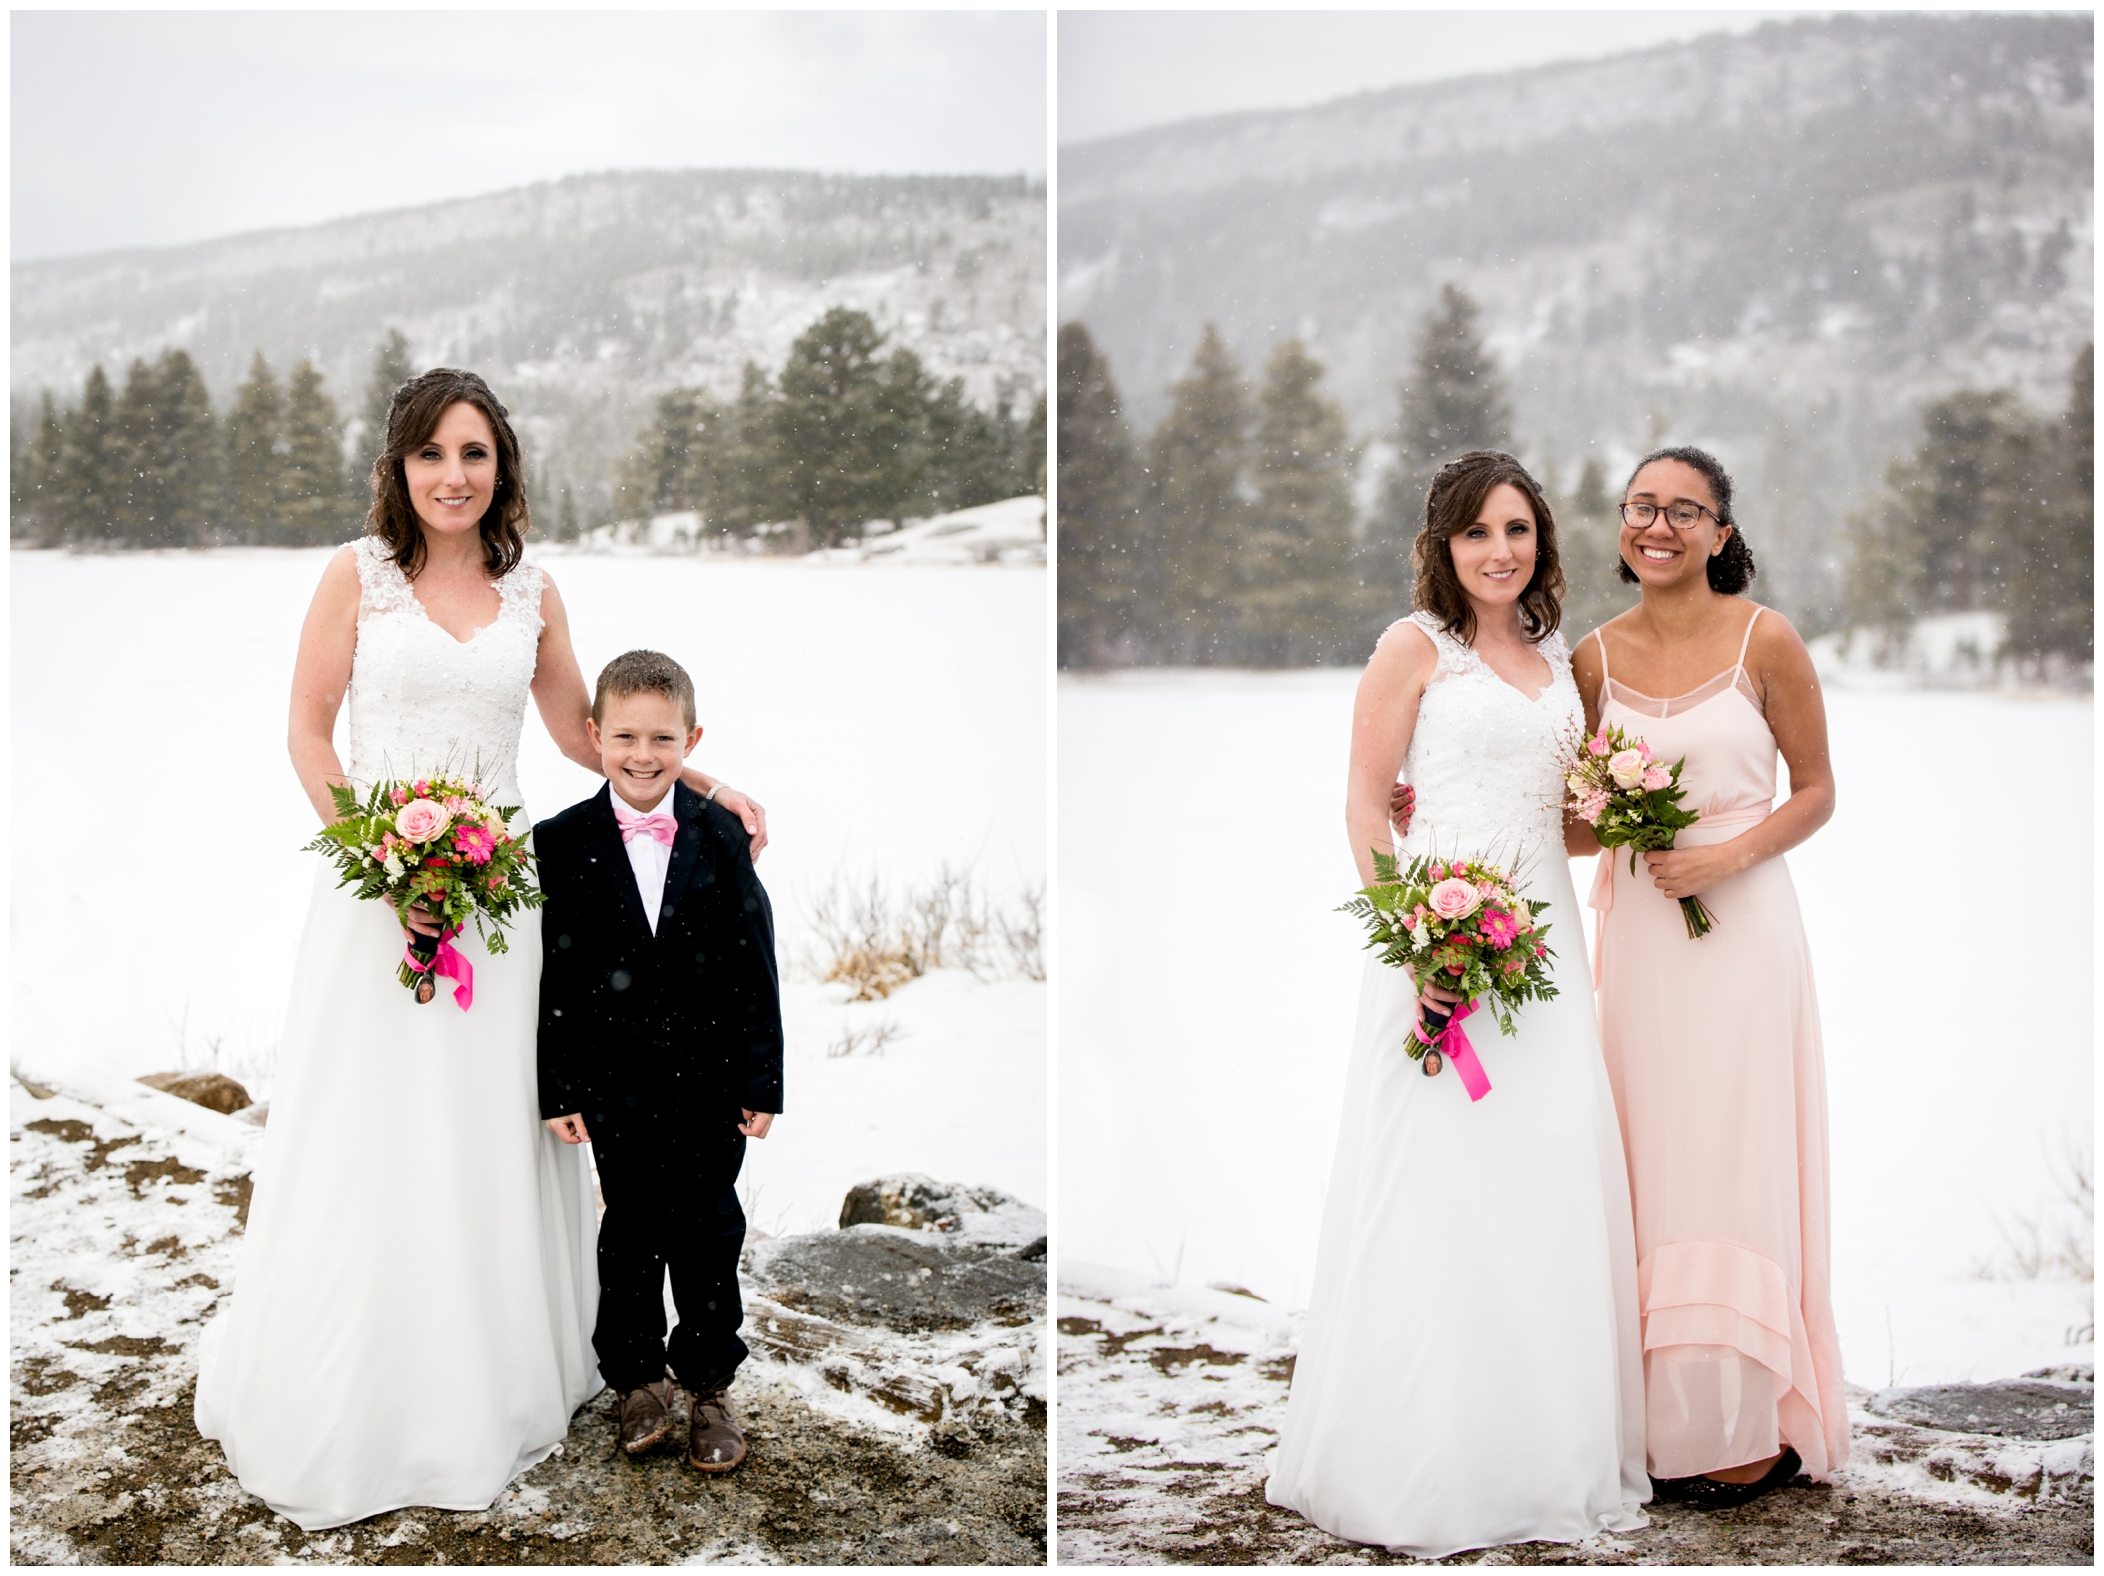 pink bridesmaids dresses at Colorado winter wedding